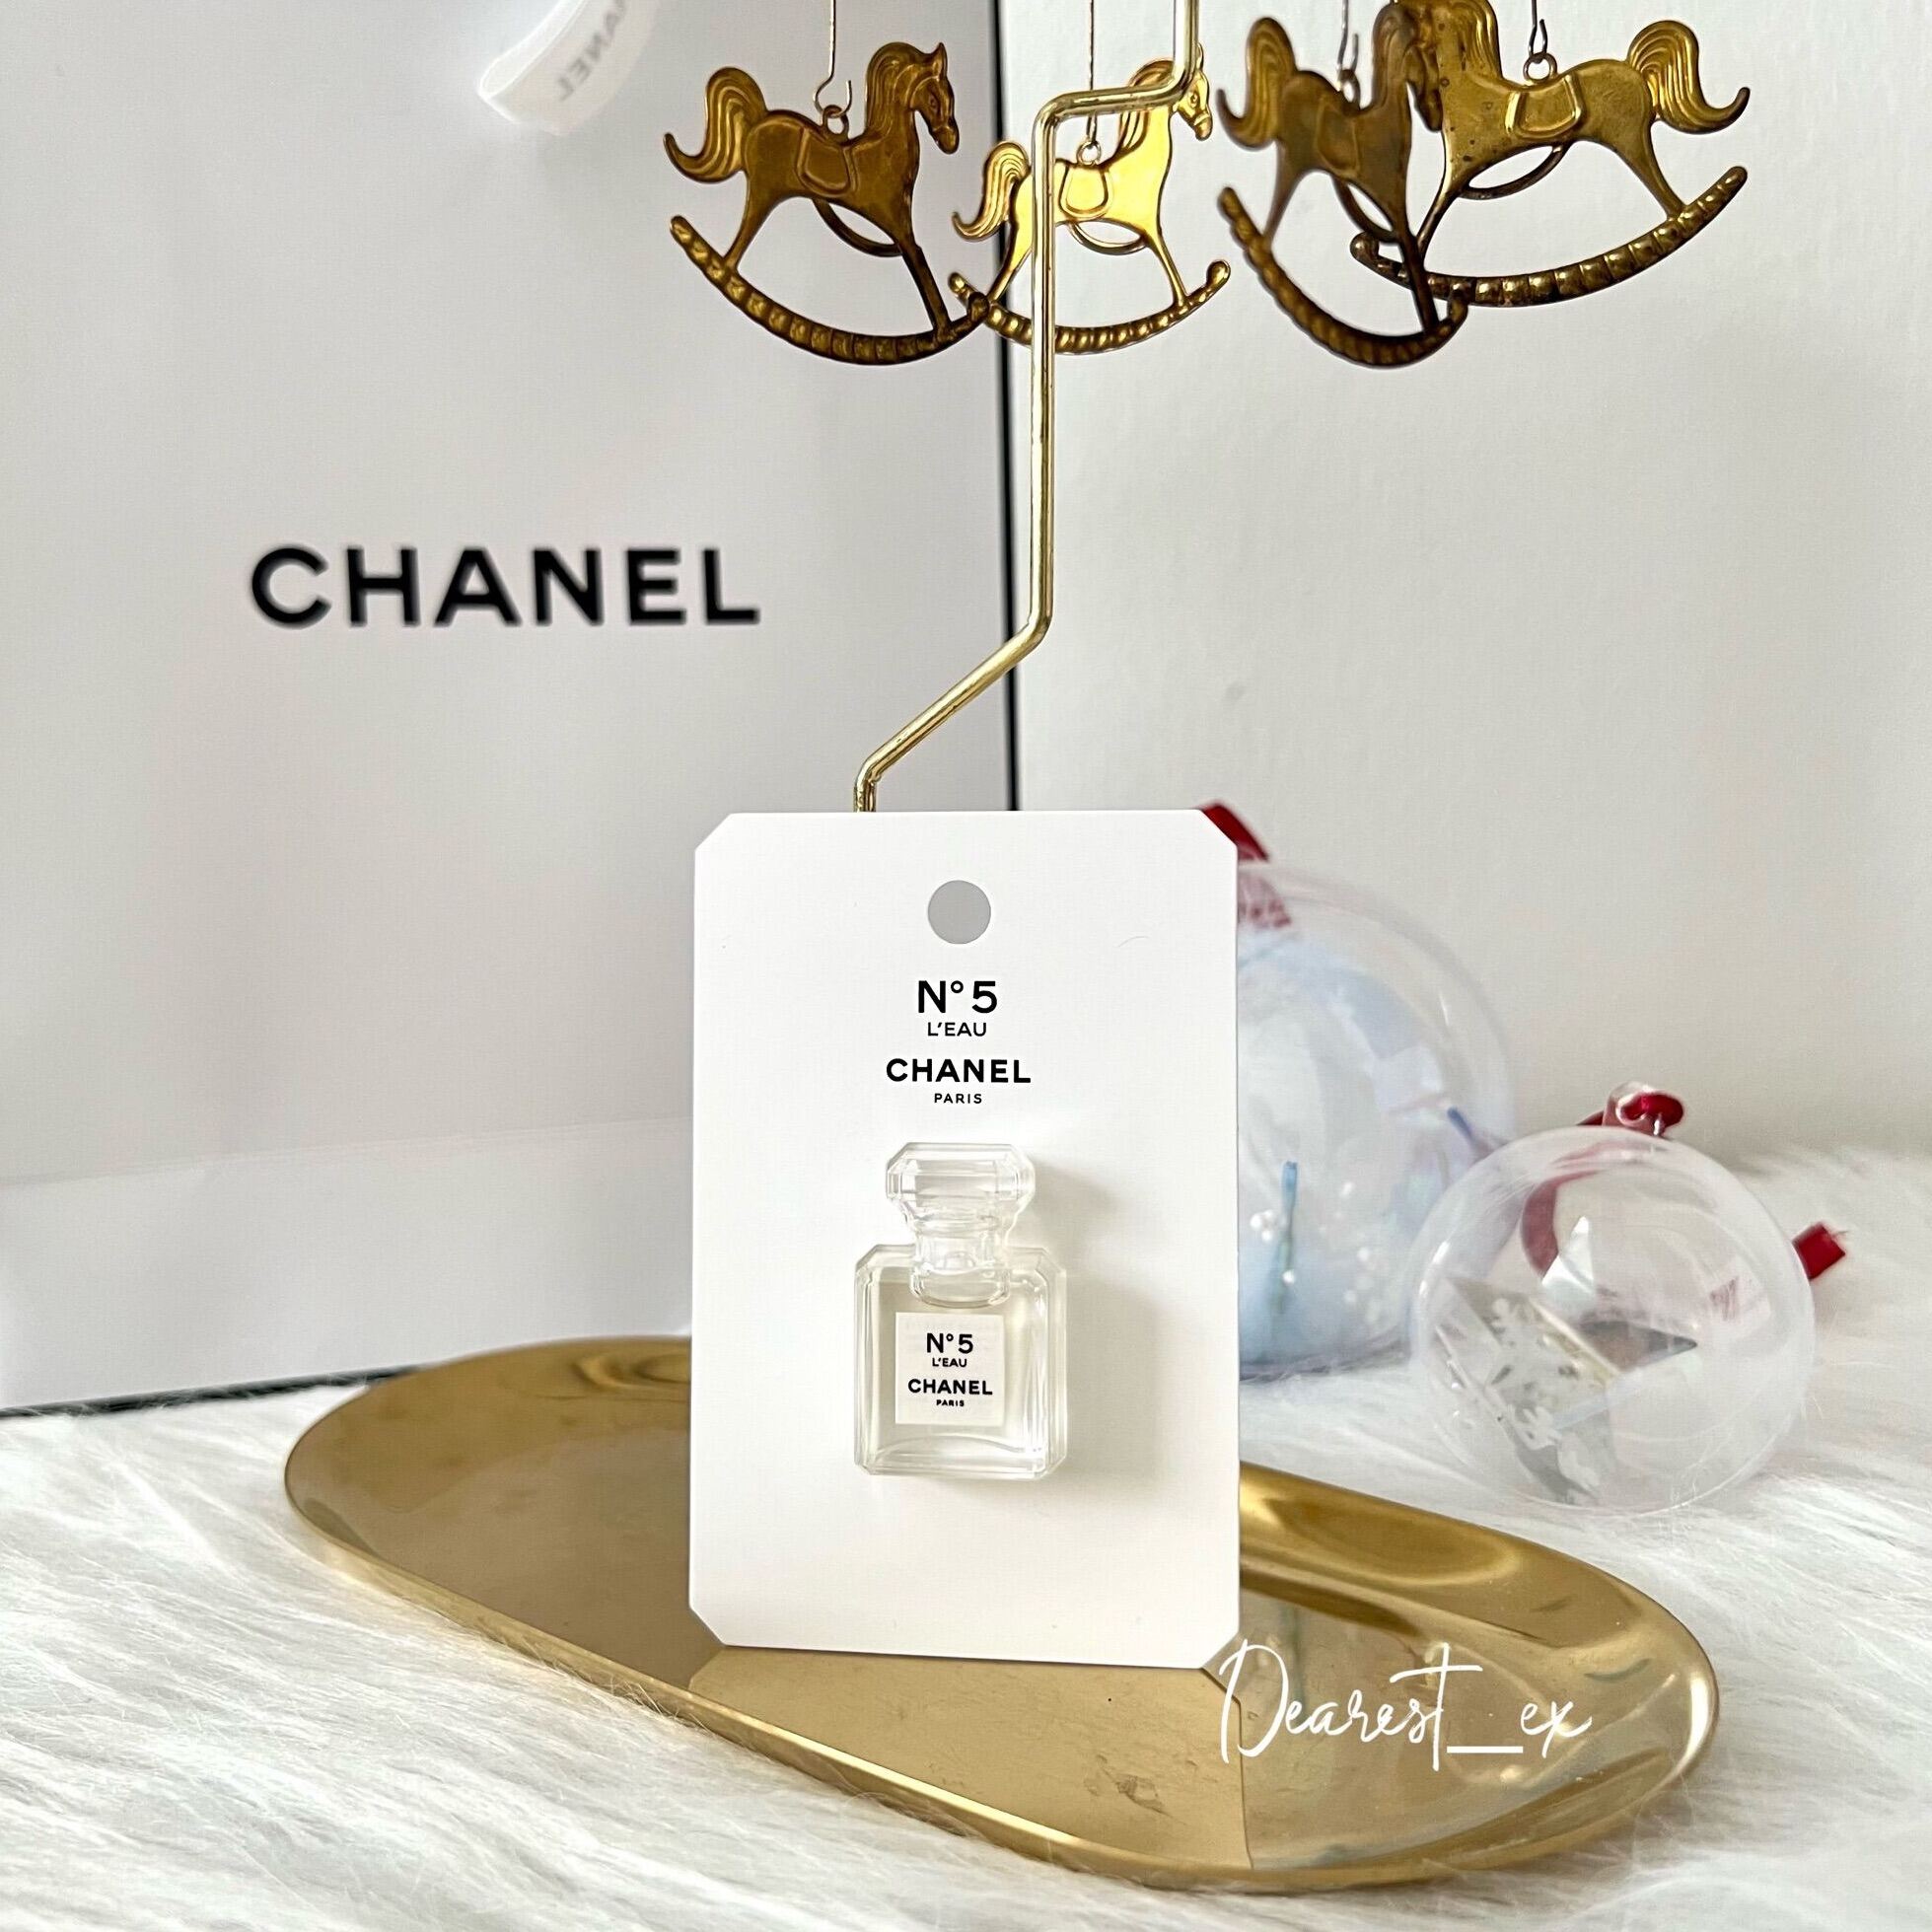 Limited Edition CC_CHANEL Factory N°5/N5 L'eau Eau De Toilette 1.5ml  Fragrance Perfume Travel Miniature N5 淡香水工业风包装